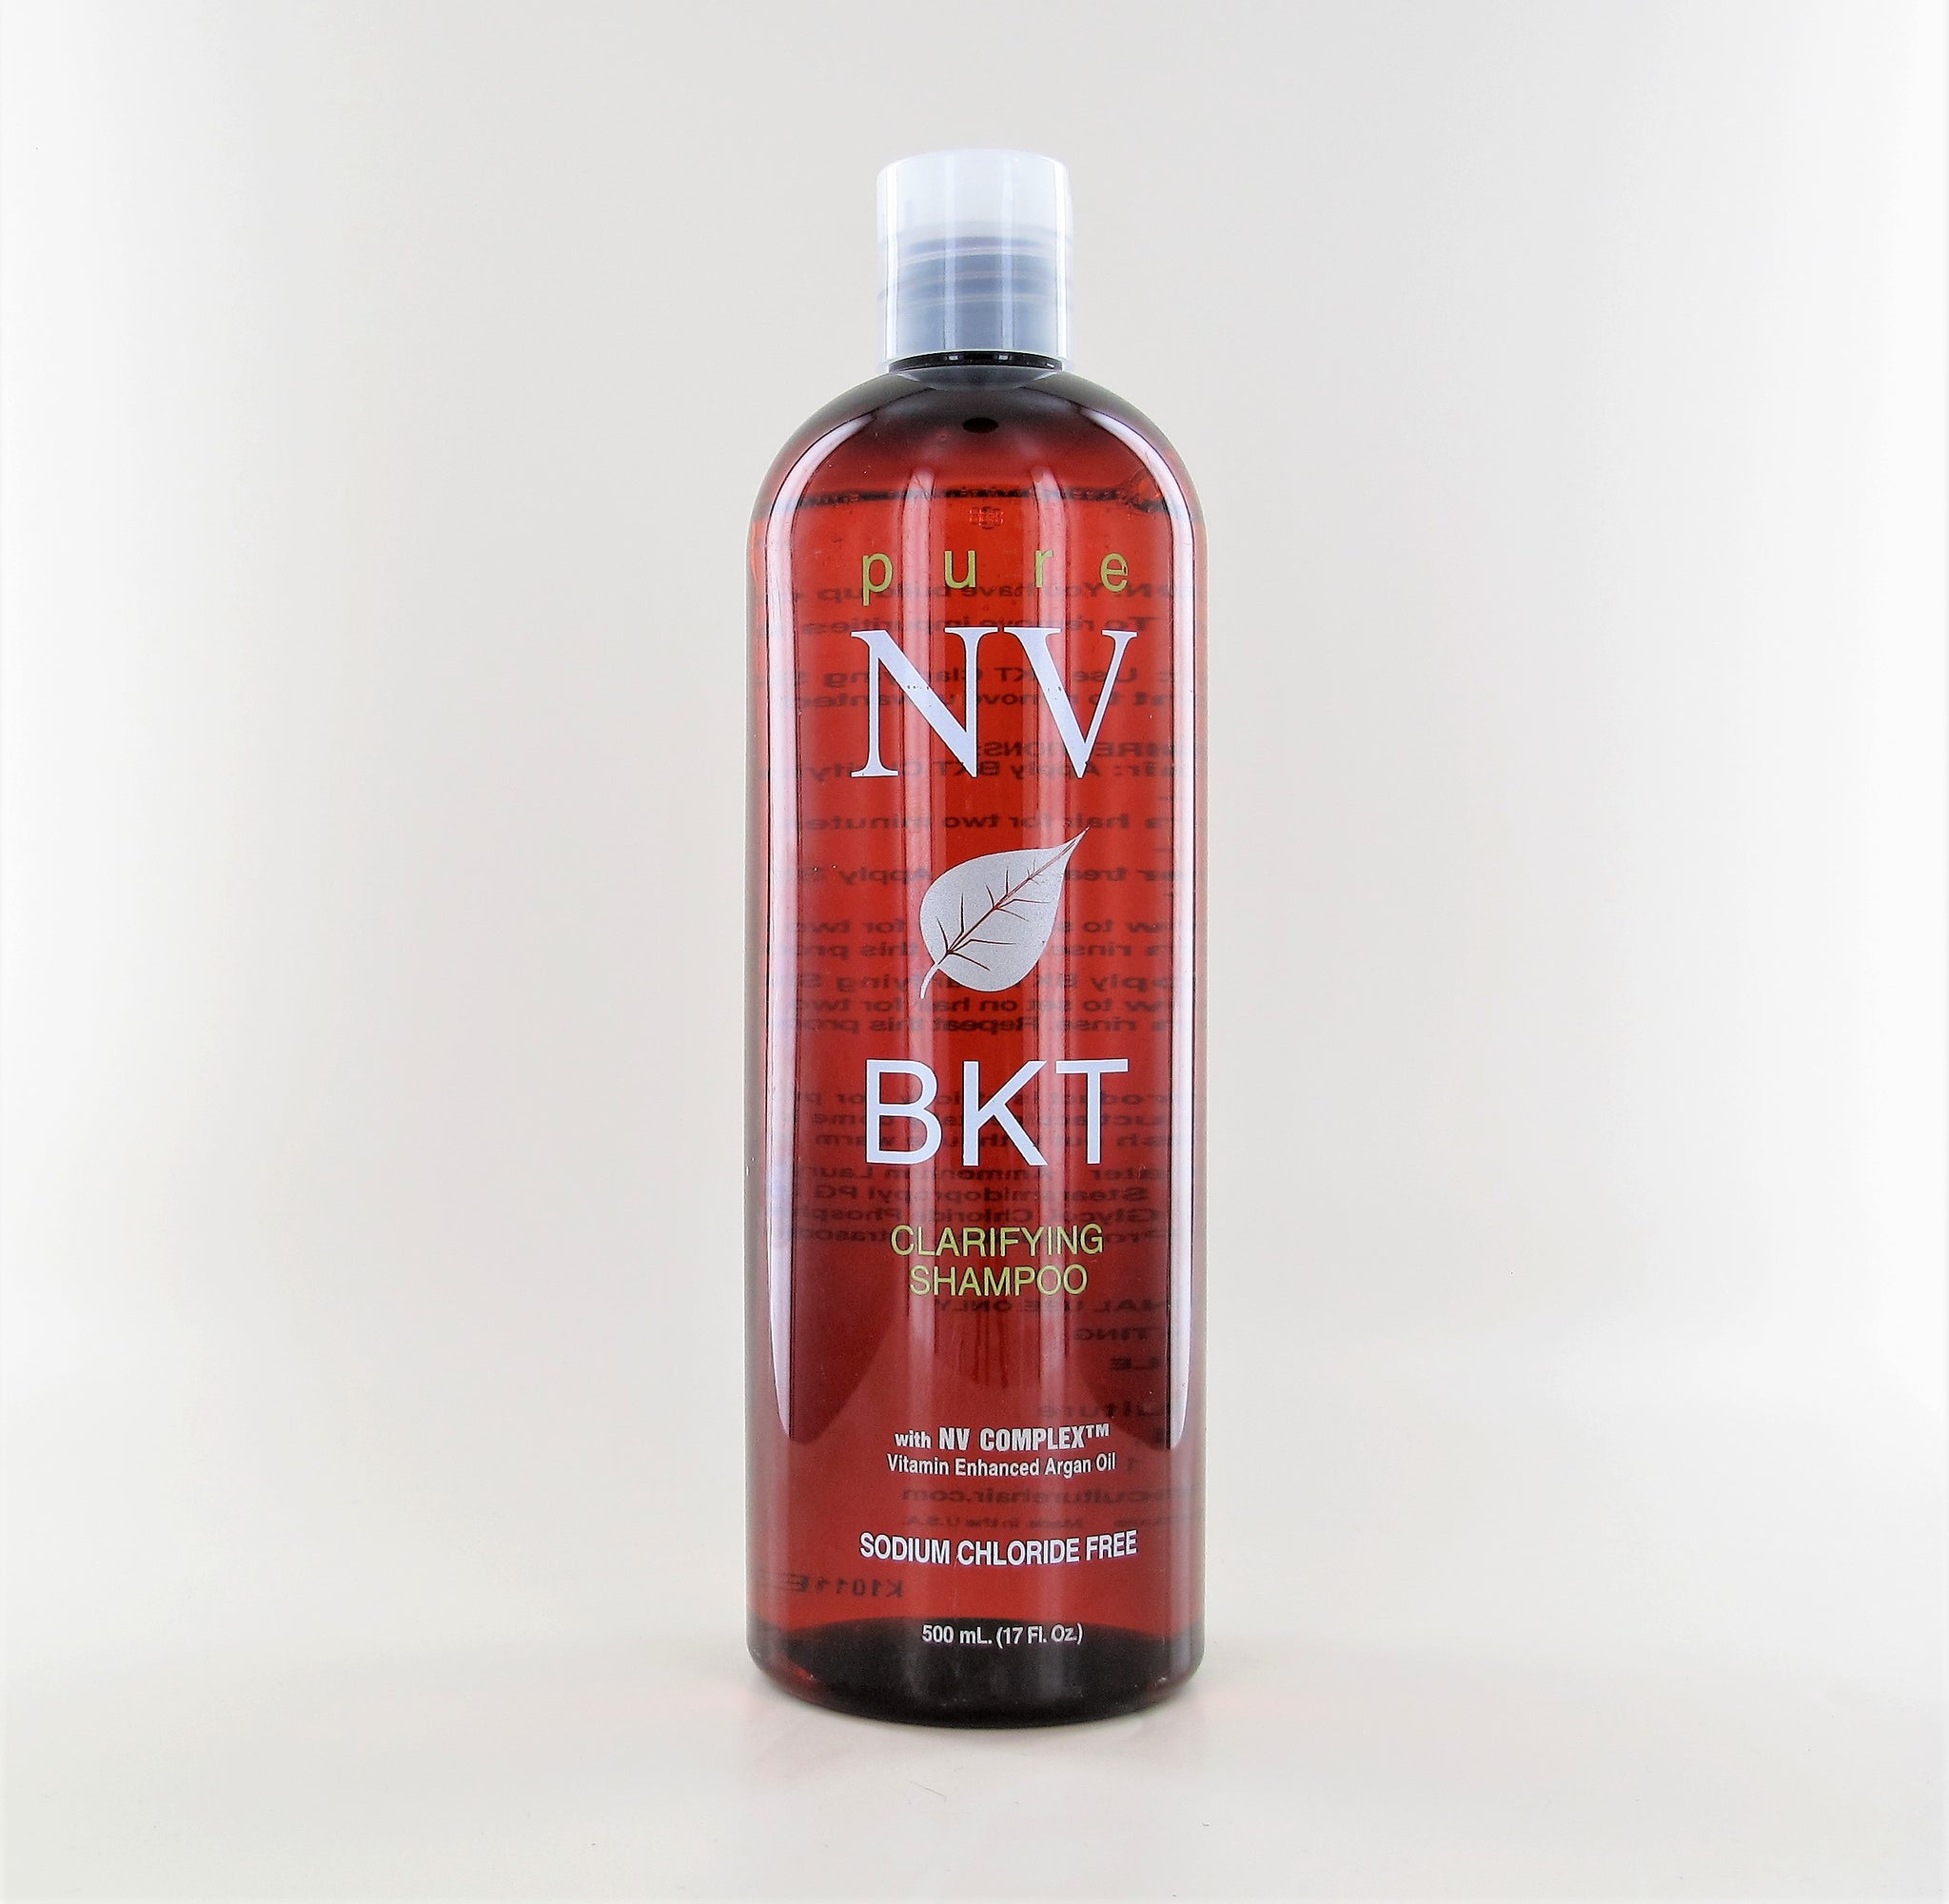 Pure NV BKT Clarifying Shampoo 17 fl oz